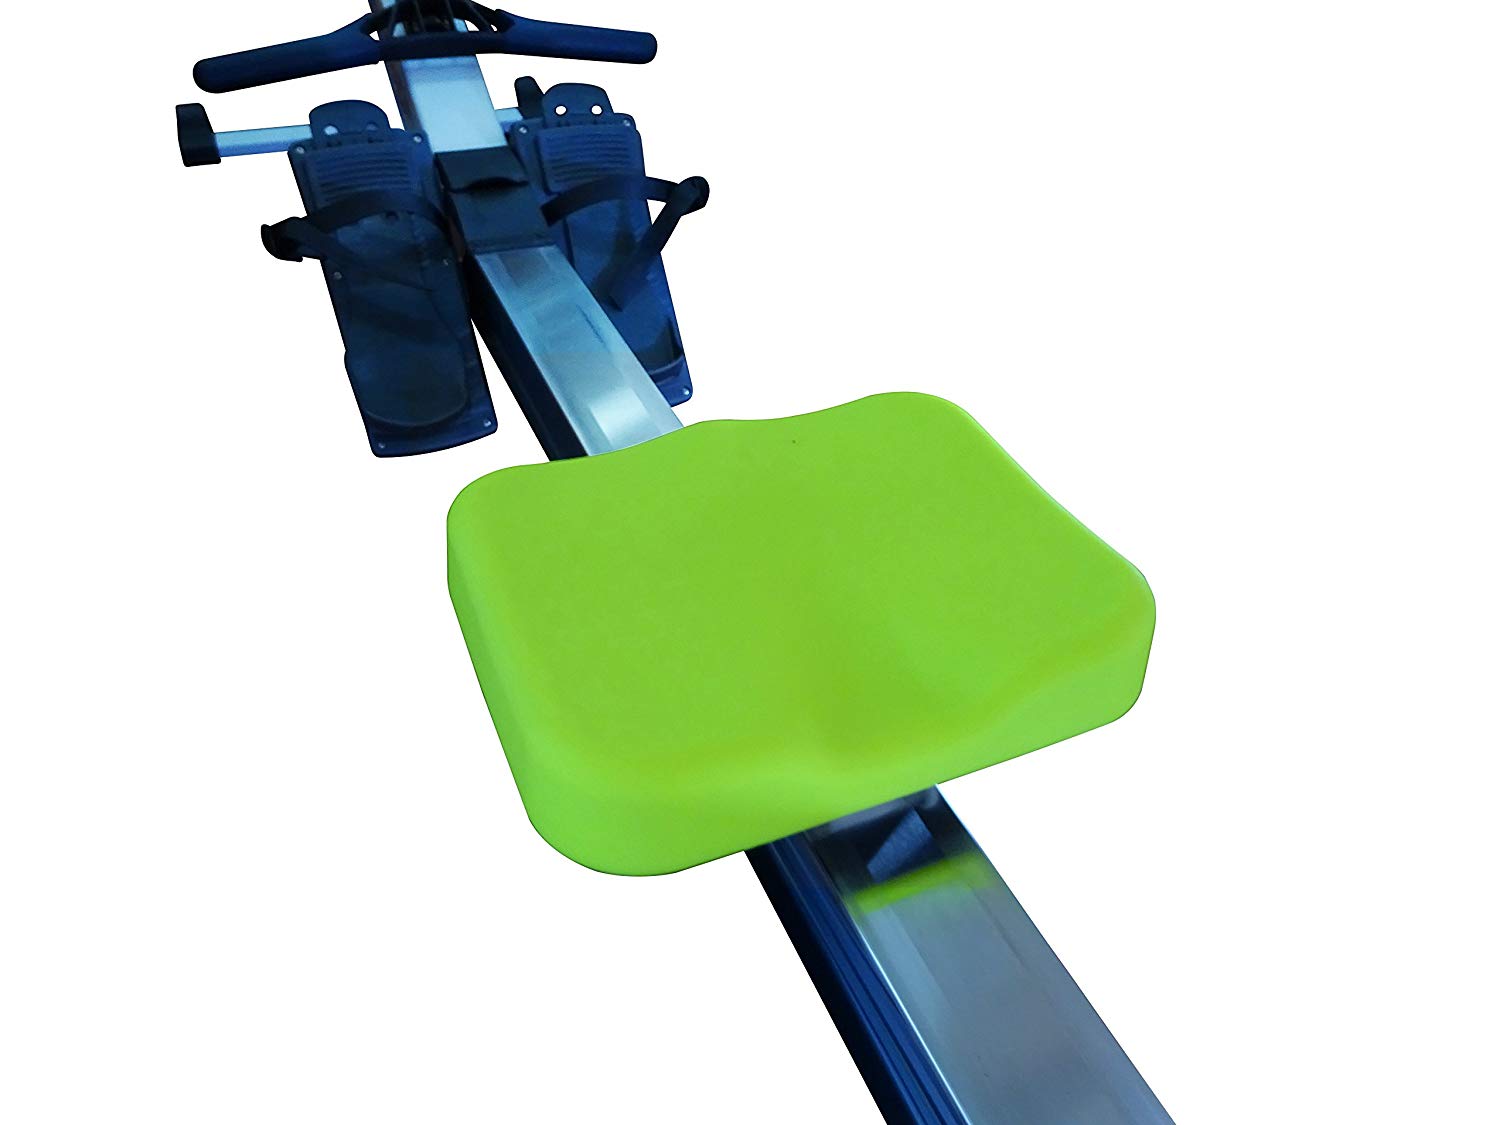 Concept 2 Rower Seat Pad - Foam Seat Pad